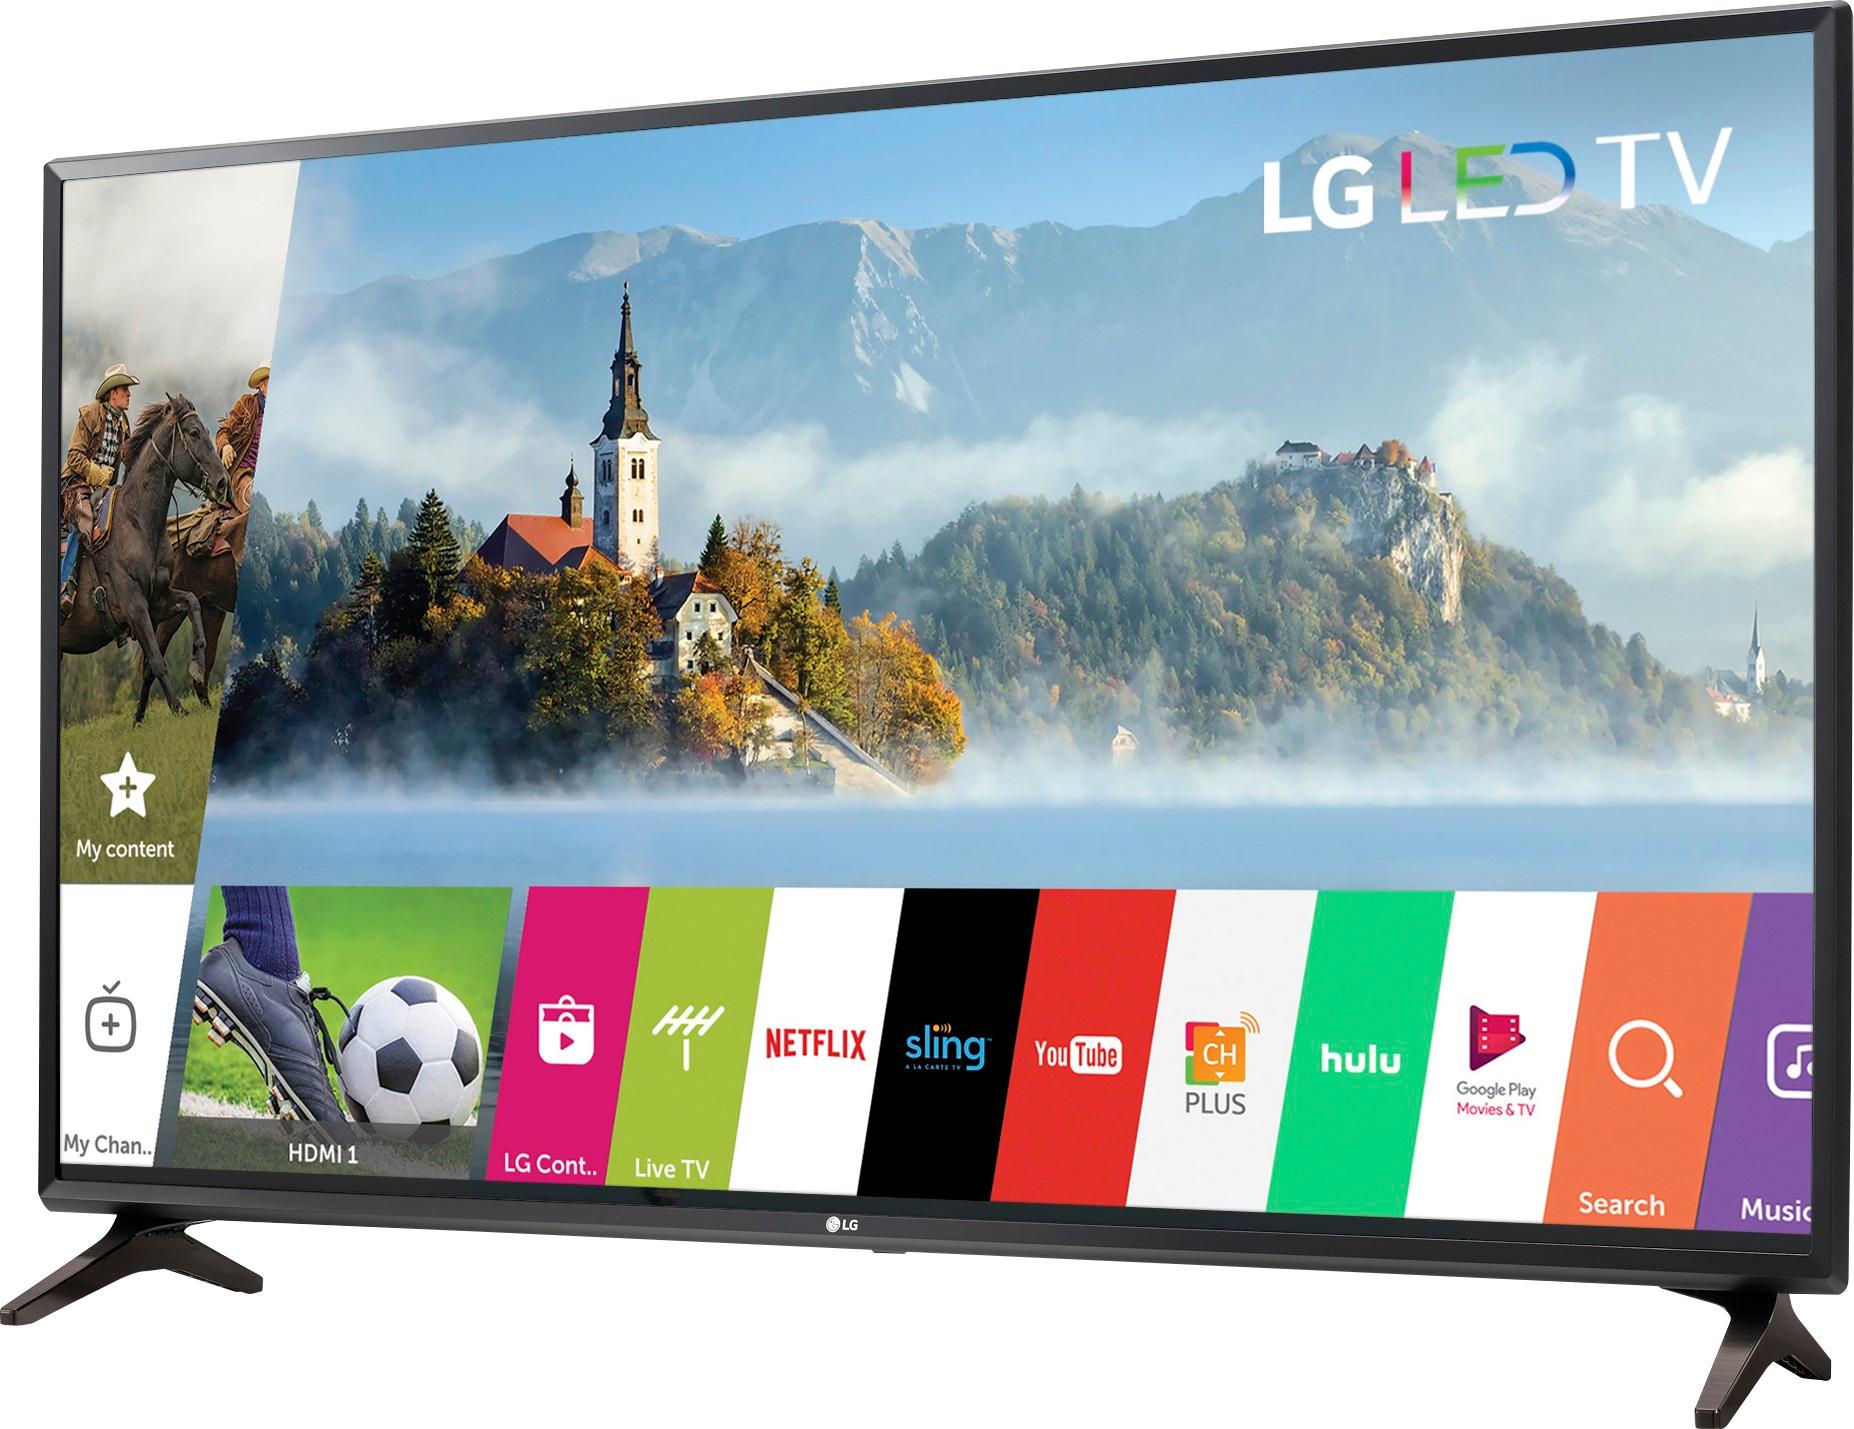 tension Rainbow Across Best Buy: LG 43" Class LED LJ550M Series 1080p Smart HDTV 43LJ550M